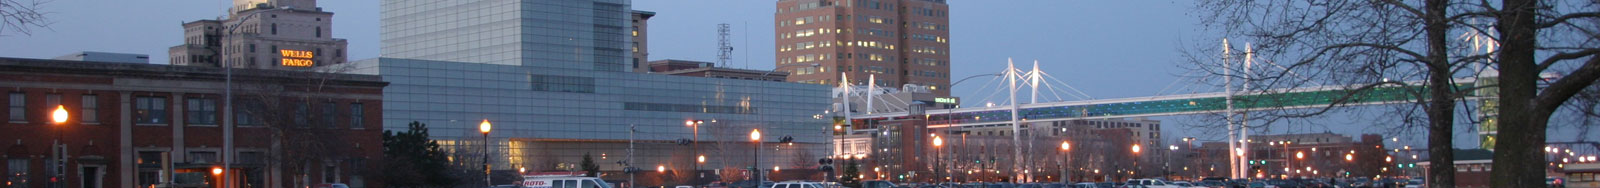 Panoramic shot of downtown Davenport, IA